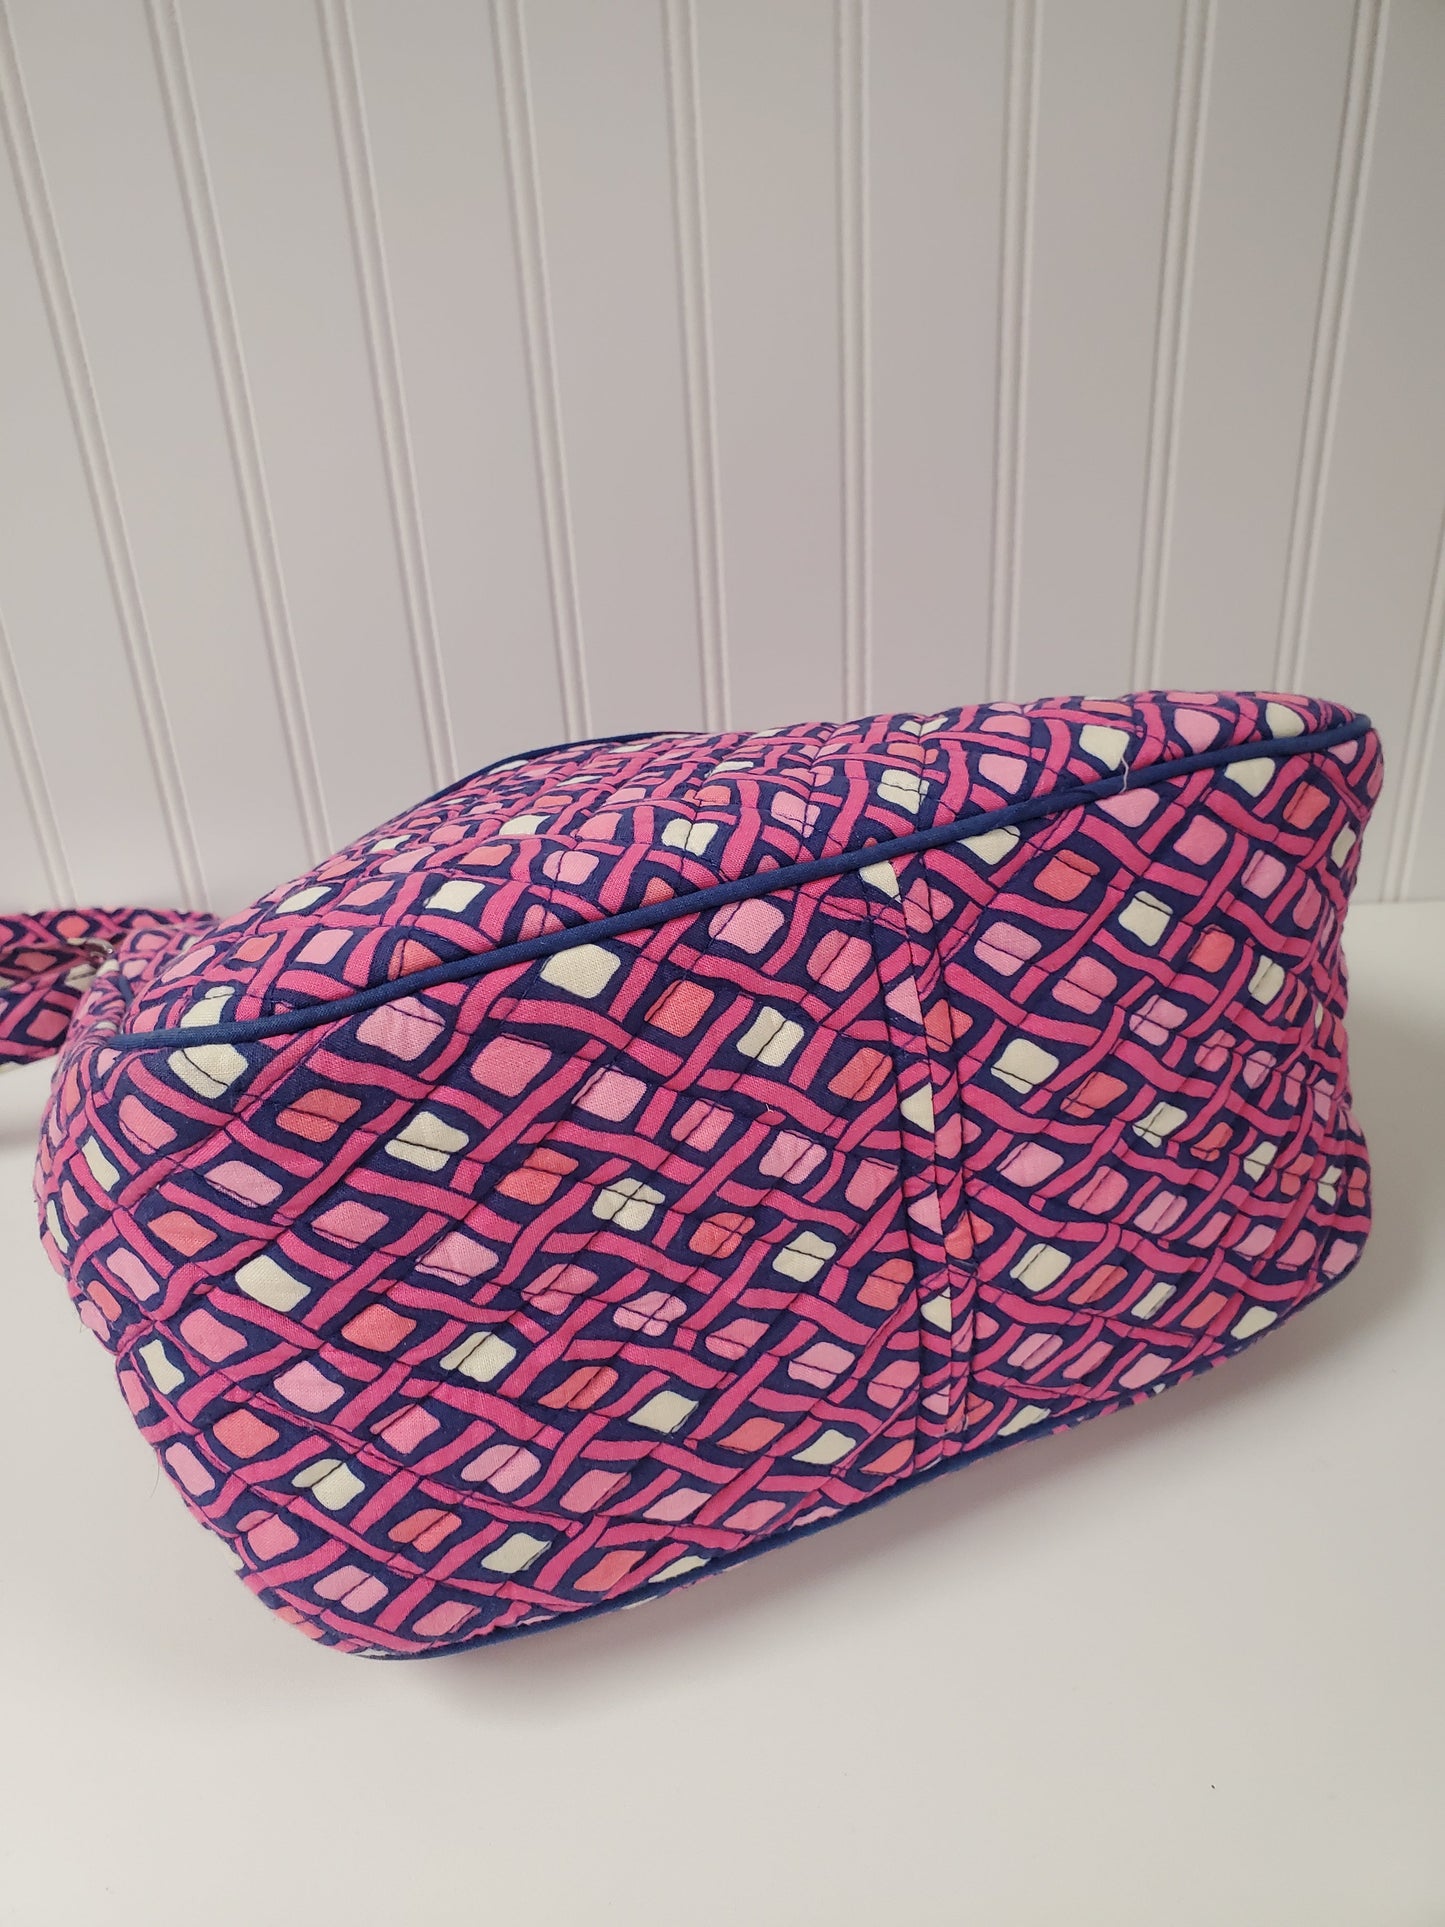 Handbag By Vera Bradley  Size: Medium